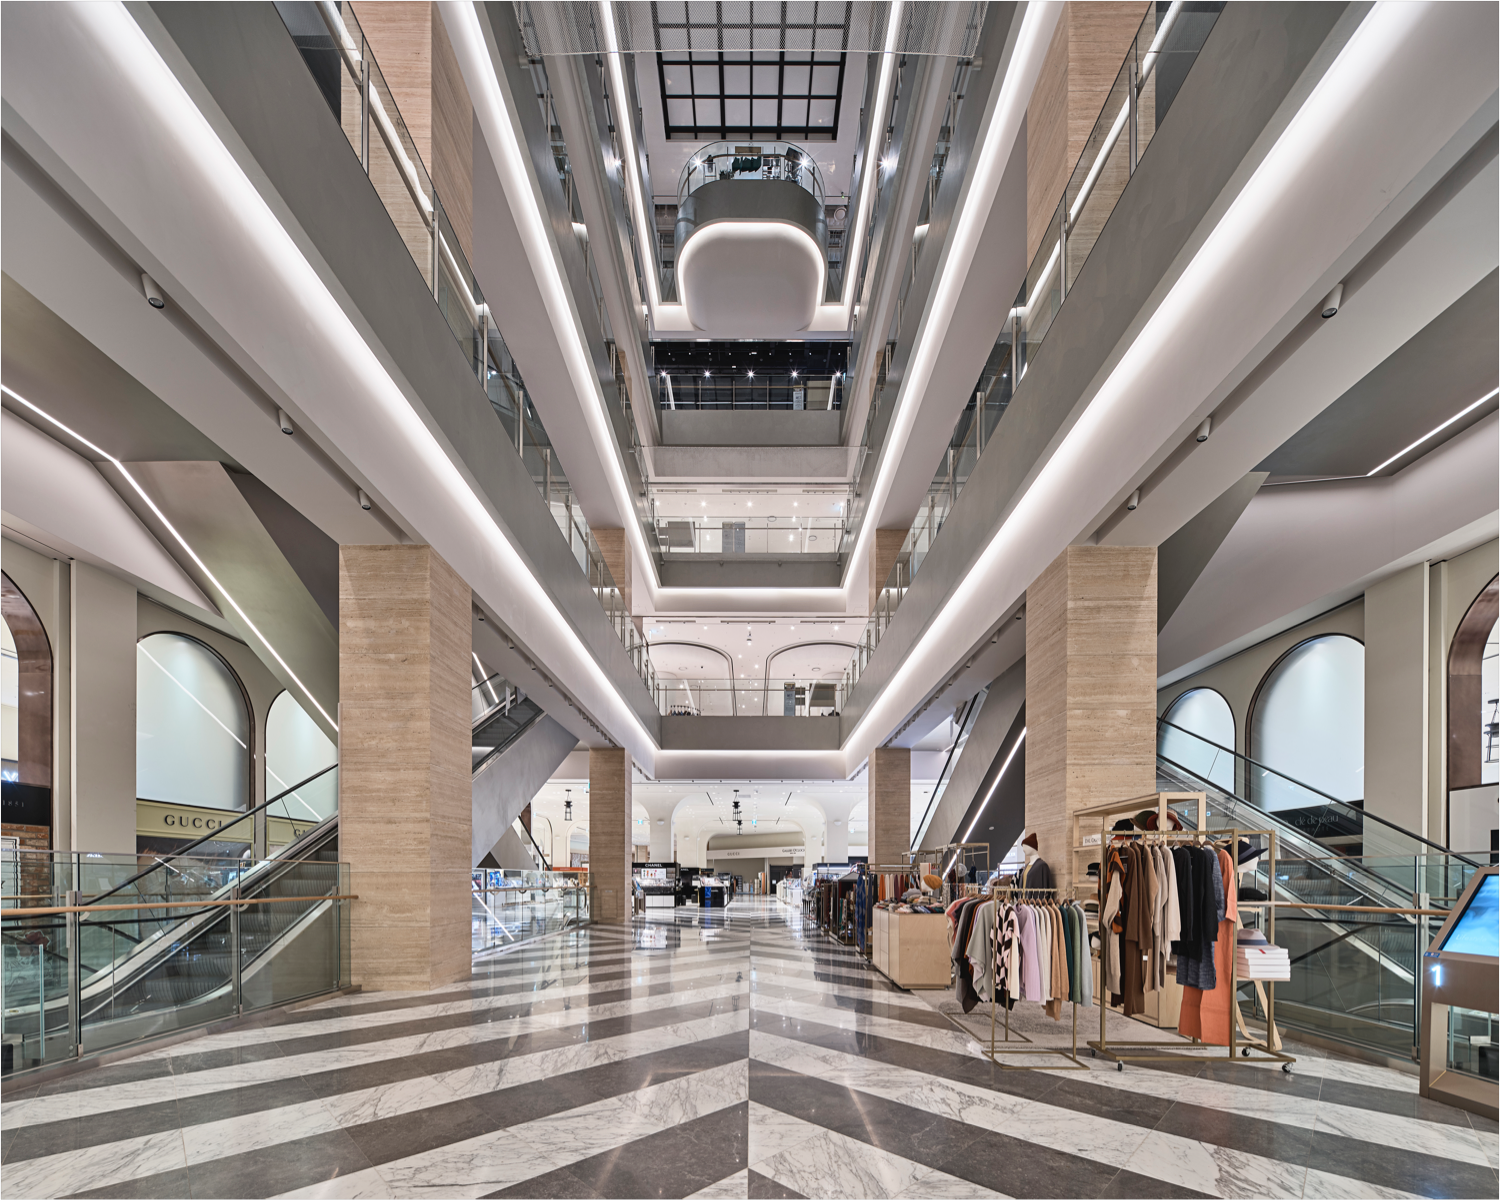 Louis Vuitton Daegu Shinsegae store, Korea